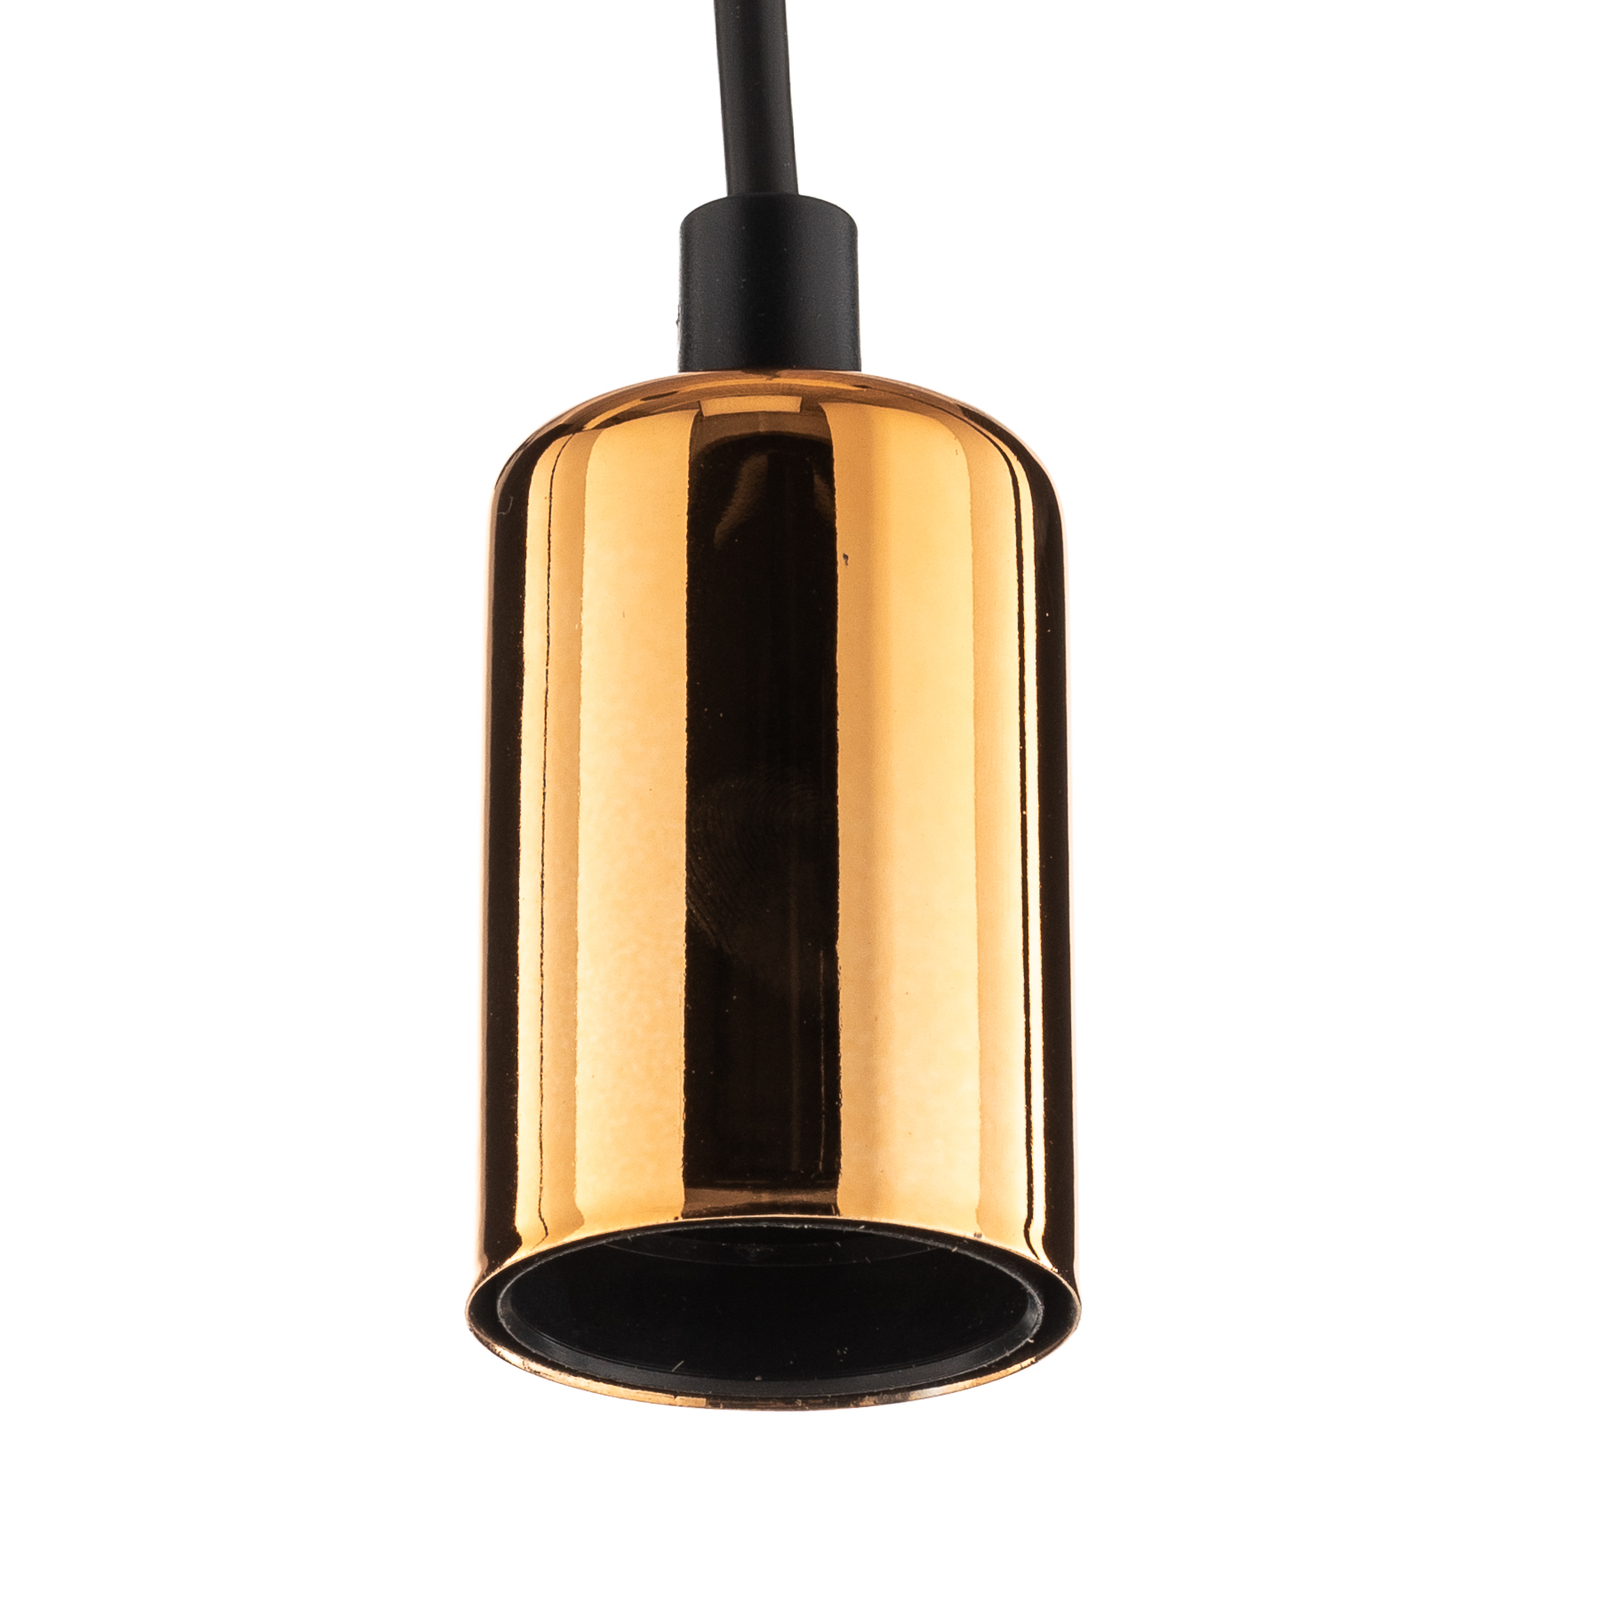 Spark 1 pendant lamp one-bulb, black/copper